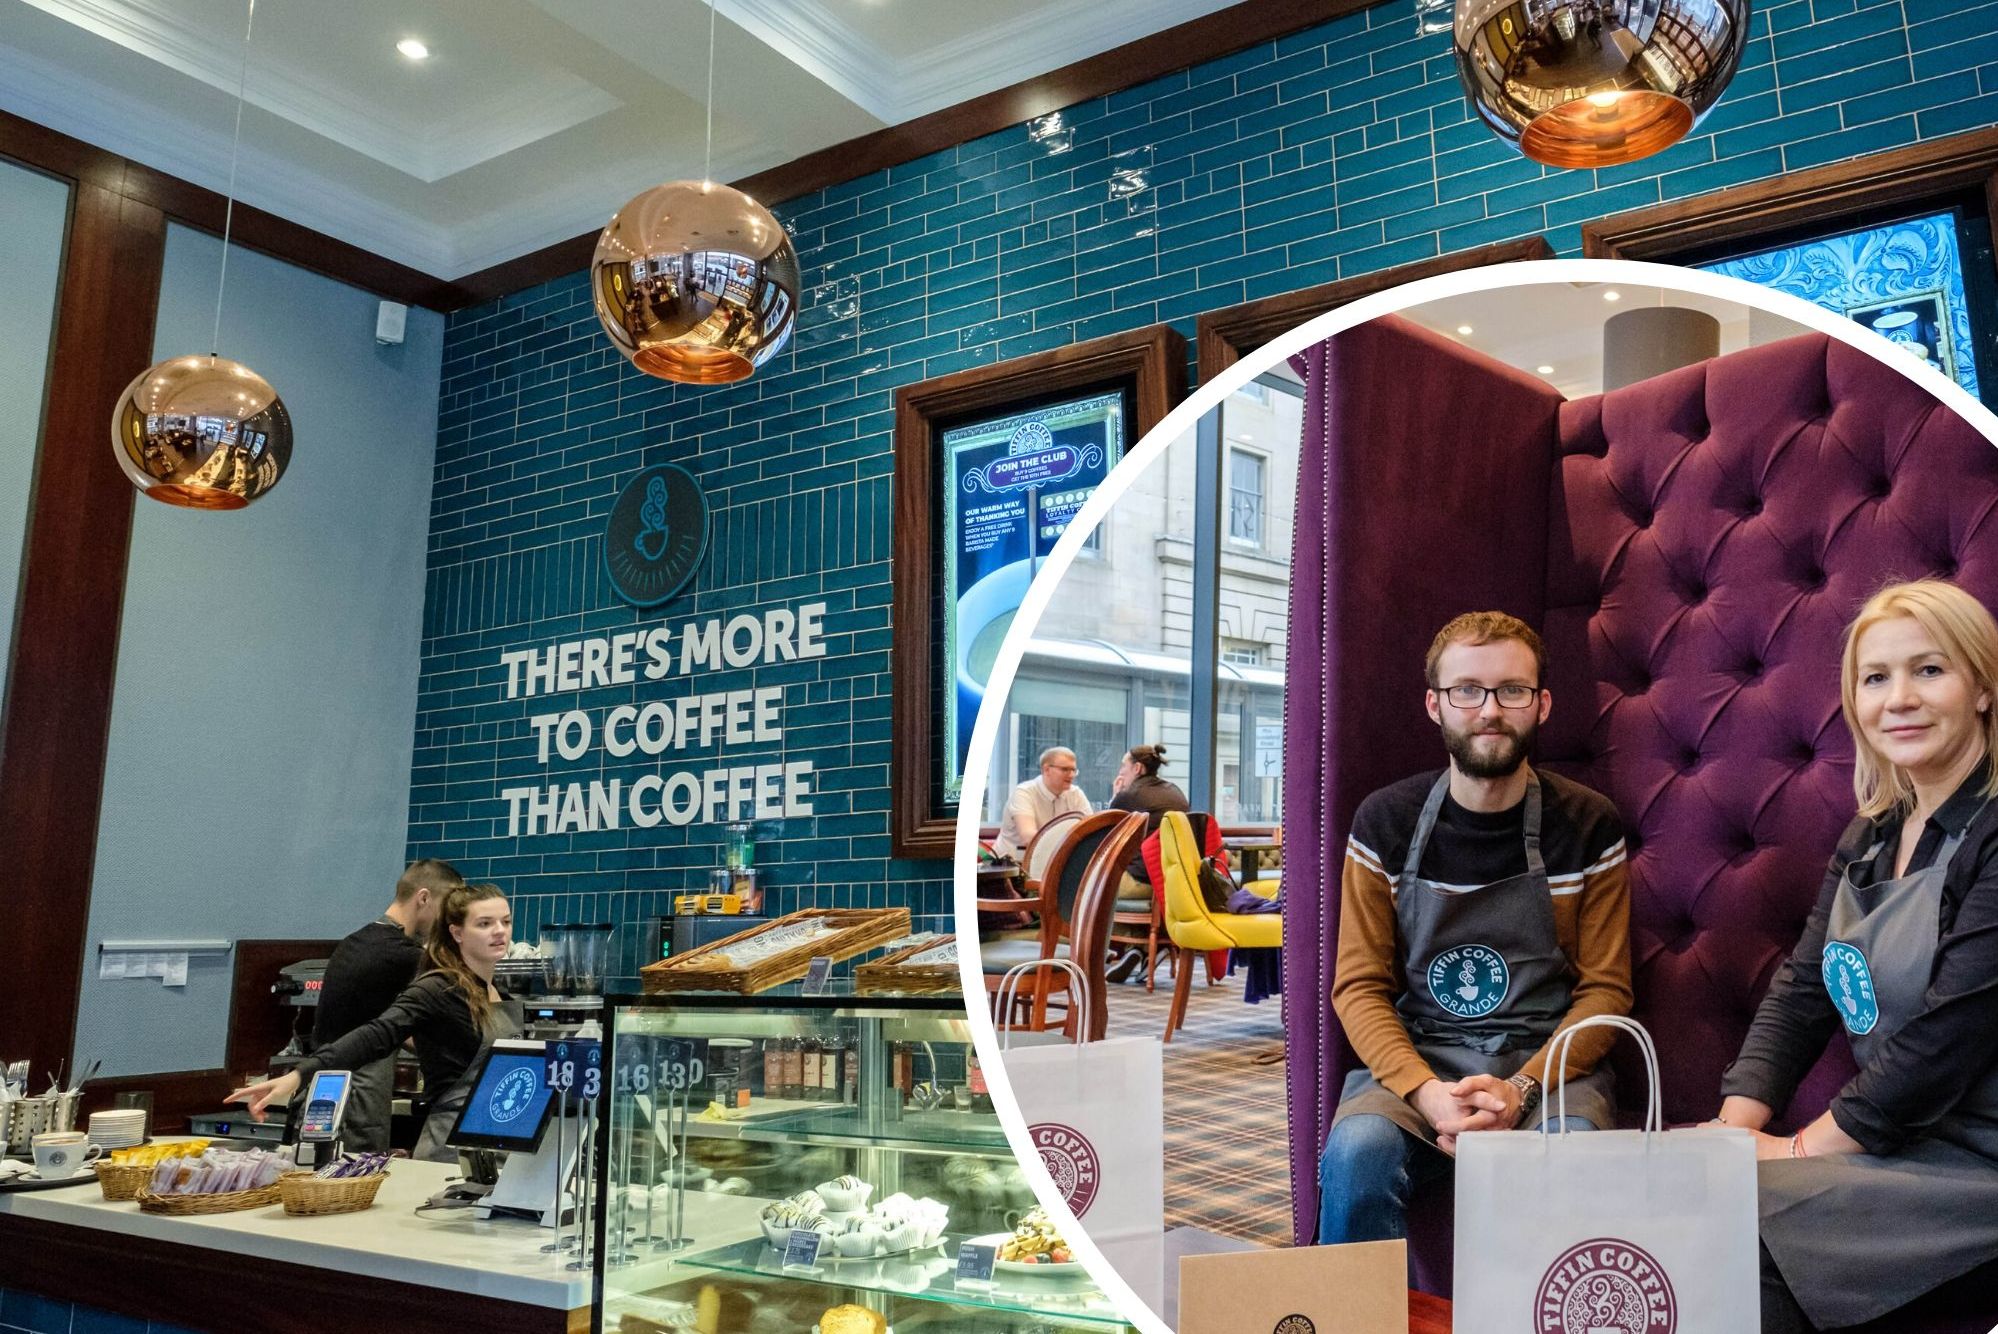 Take a look inside Bradford's newest spot Tiffin Coffee Grande